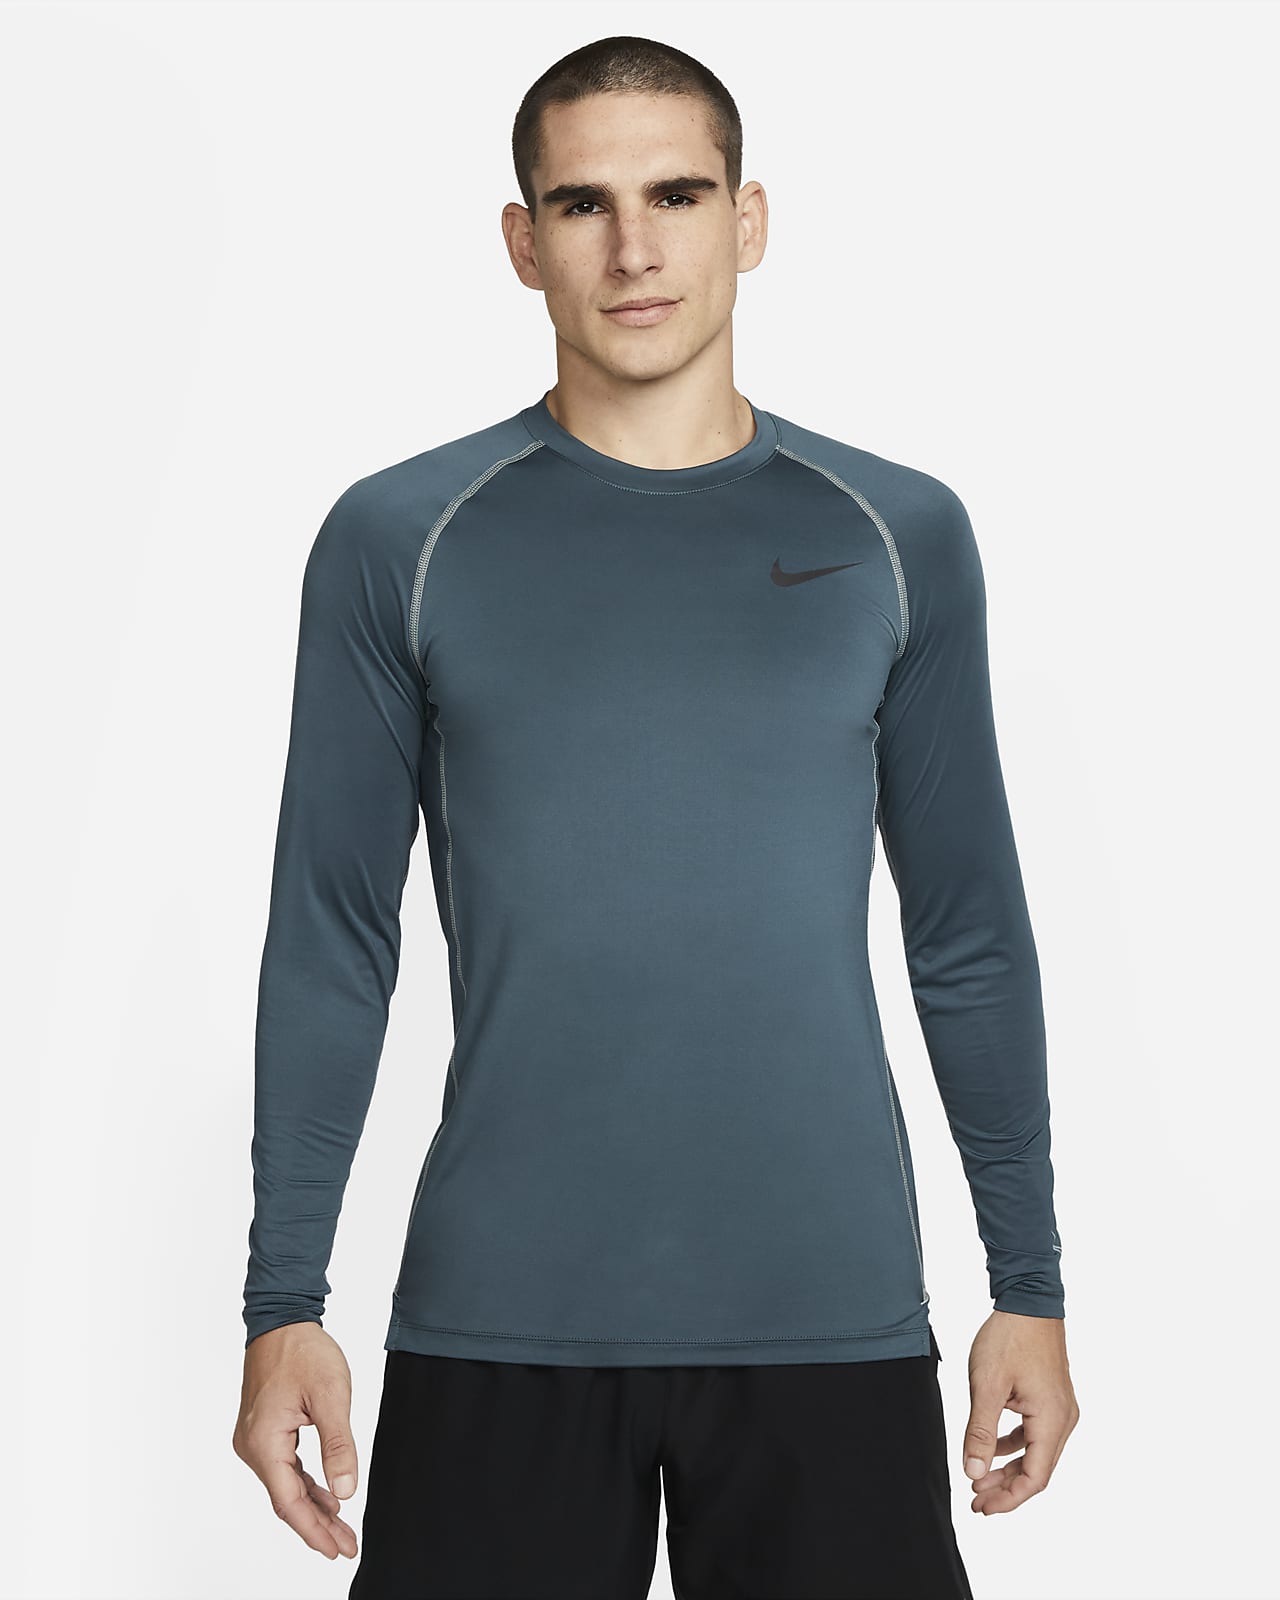 Nike Dri-FIT Men's Slim Fit Long-Sleeve Top. Nike.com